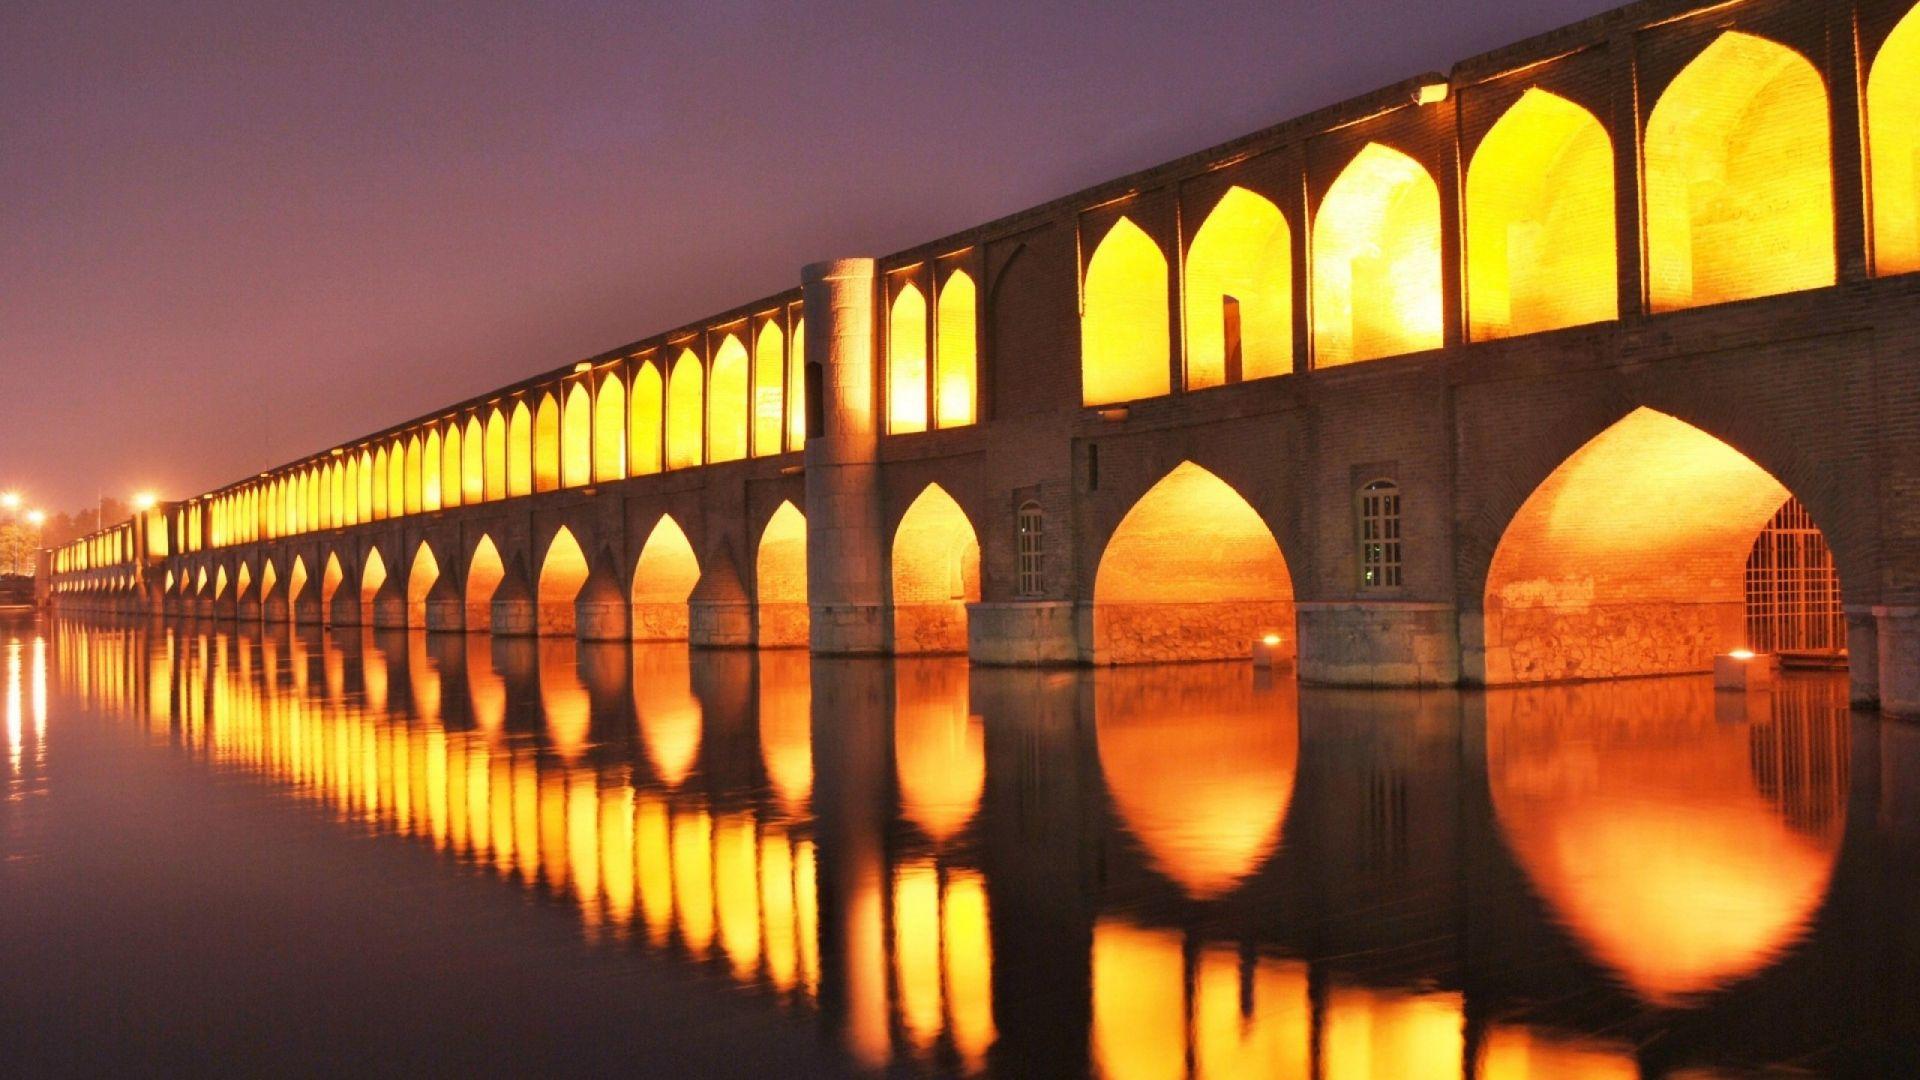 Download Wallpaper 1920x1080 isfahan, iran, bridges, night, light